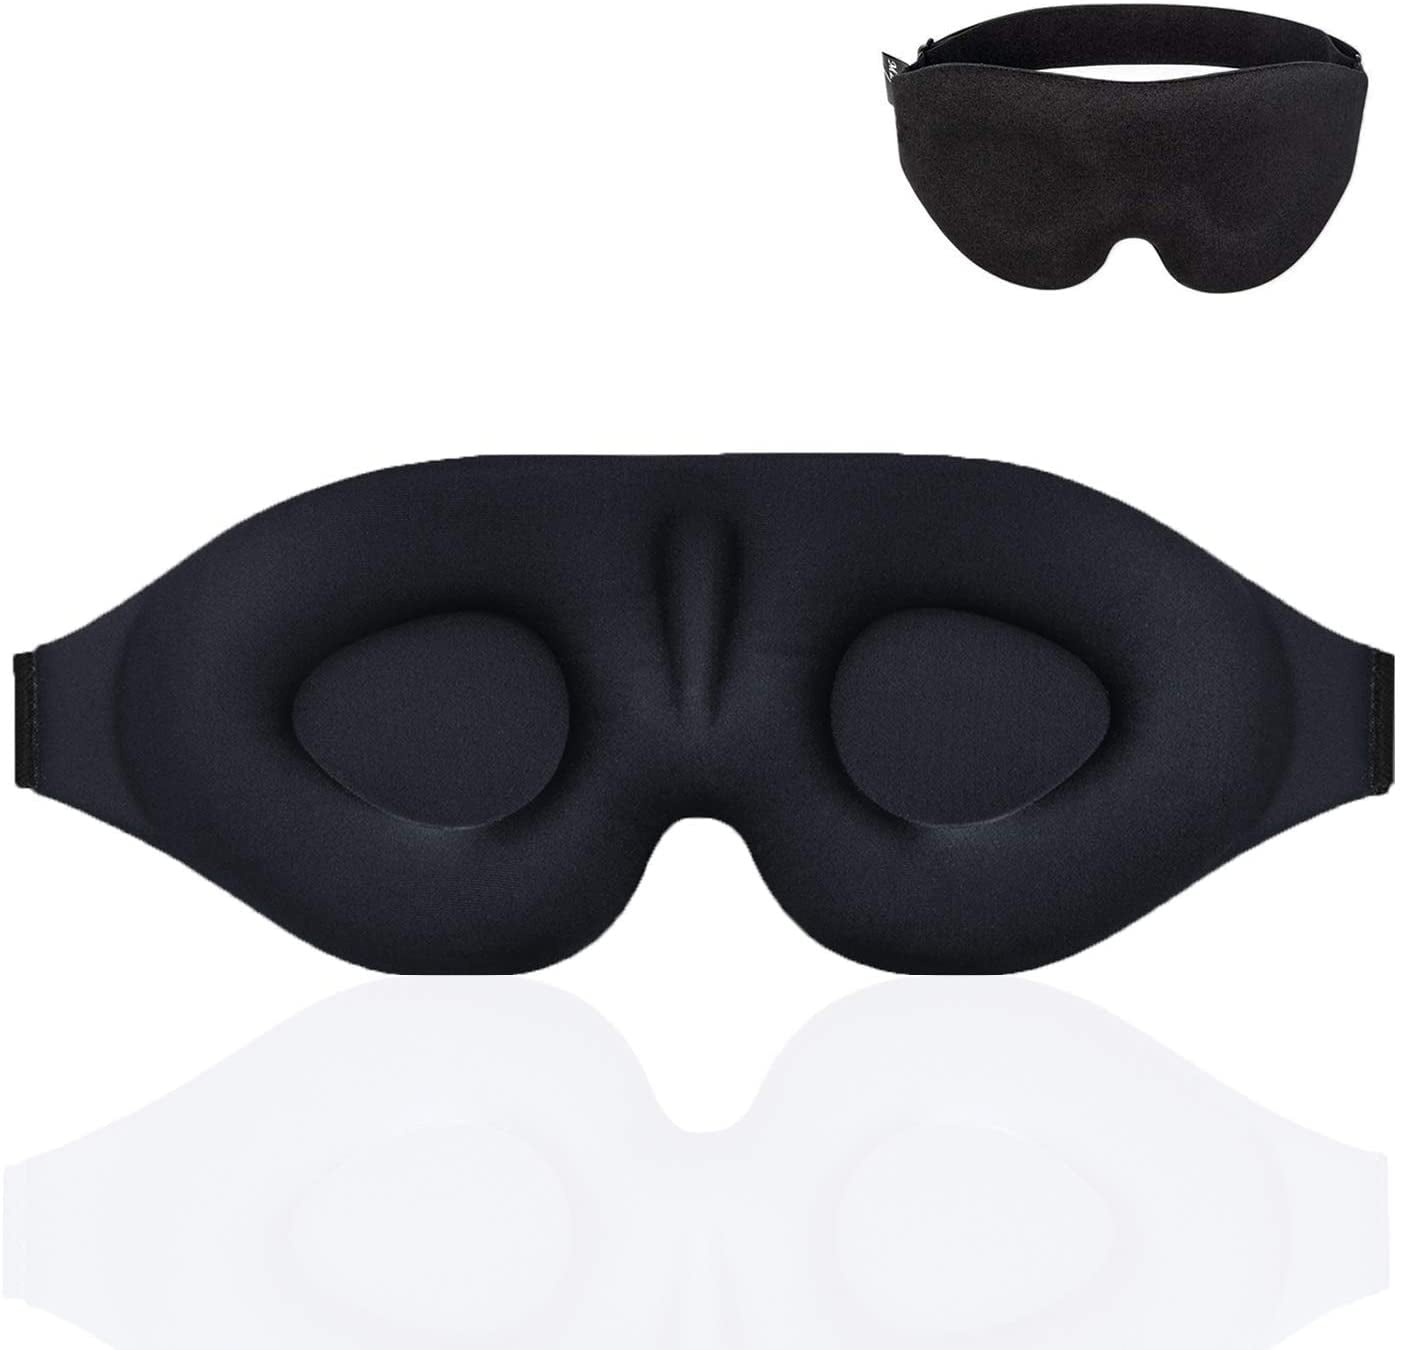  LEEKEN 3D Sleeping Eye Mask - 100% Lights Blockout Sleep Mask  for Men Women, Cool Sports Fabric Eye Cover for Travel/Nap/Night  Sleeping,Comfortable and Breathable… (mesh-Grey) : Health & Household